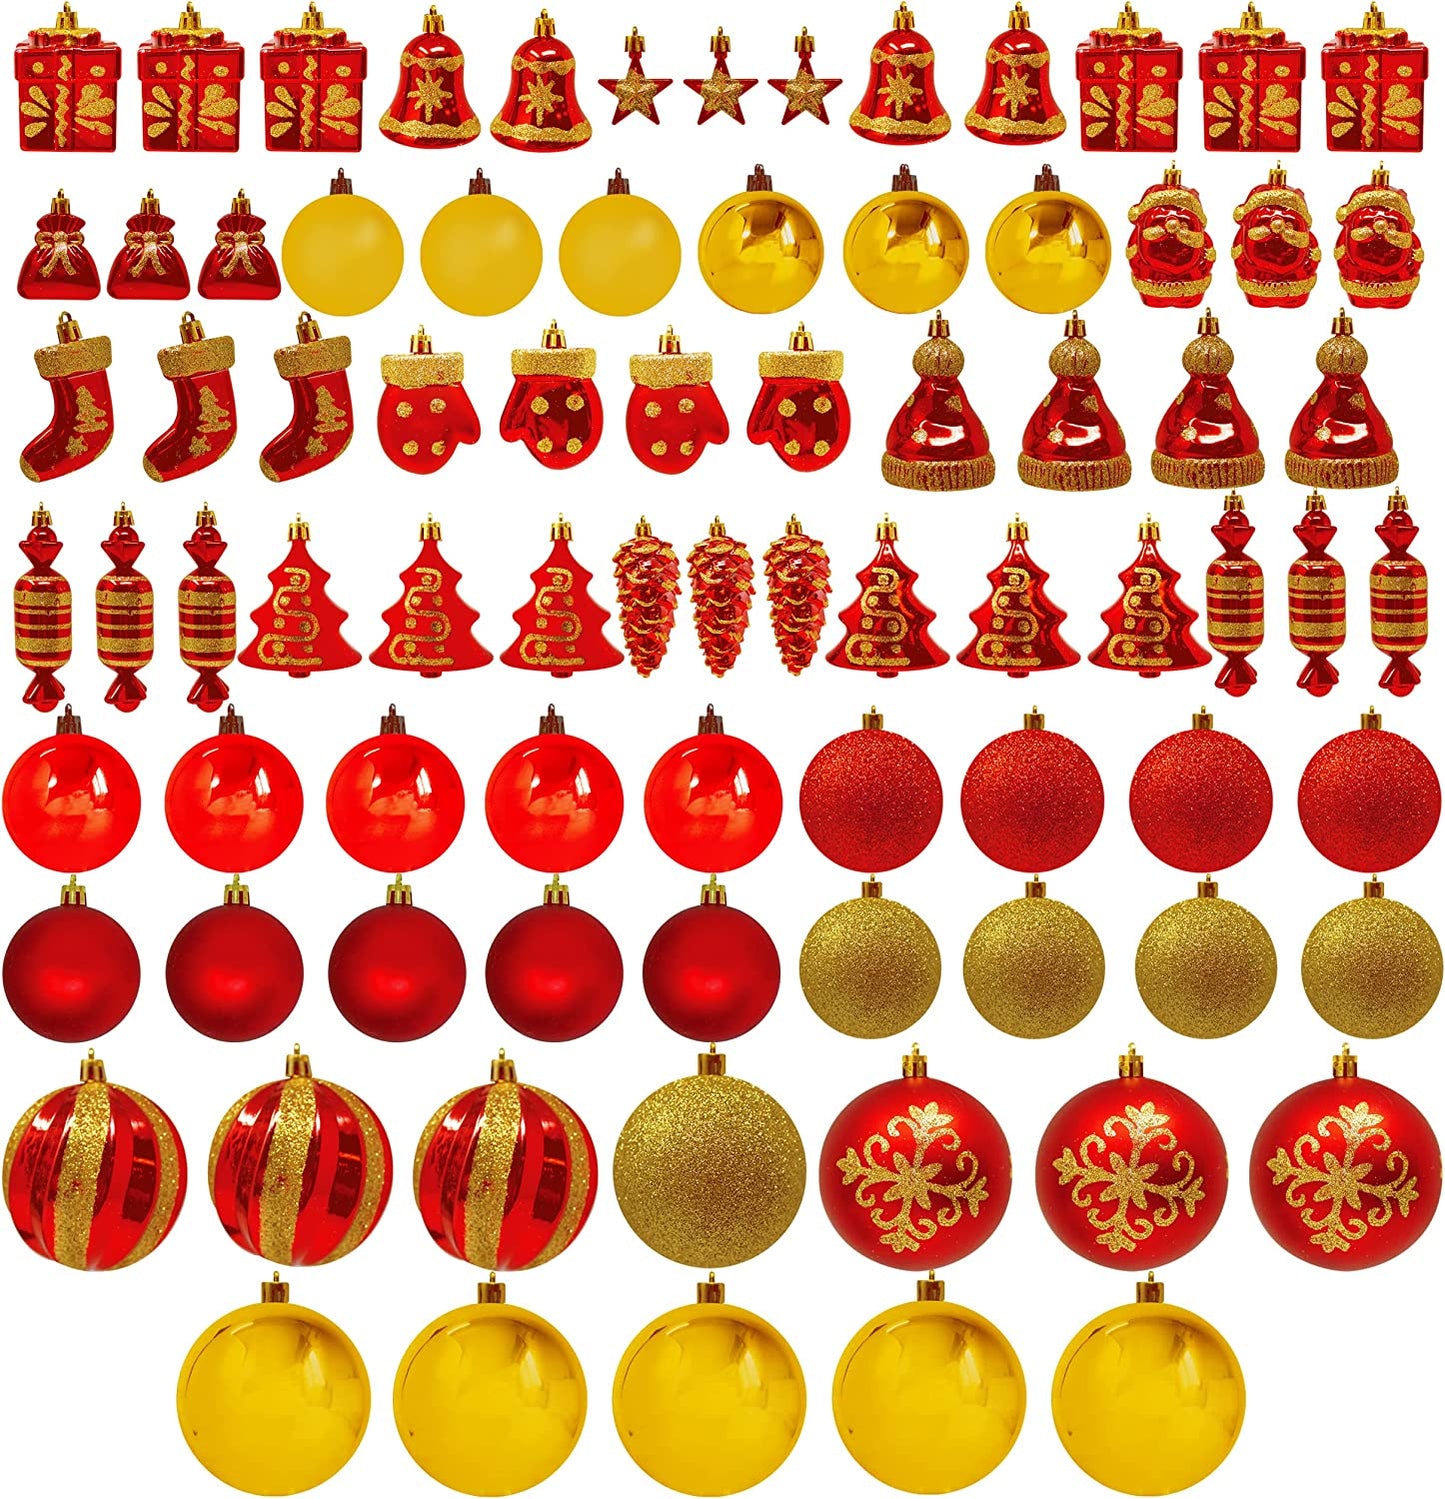 81 Pcs Red & Gold Christmas Ball Ornaments Set